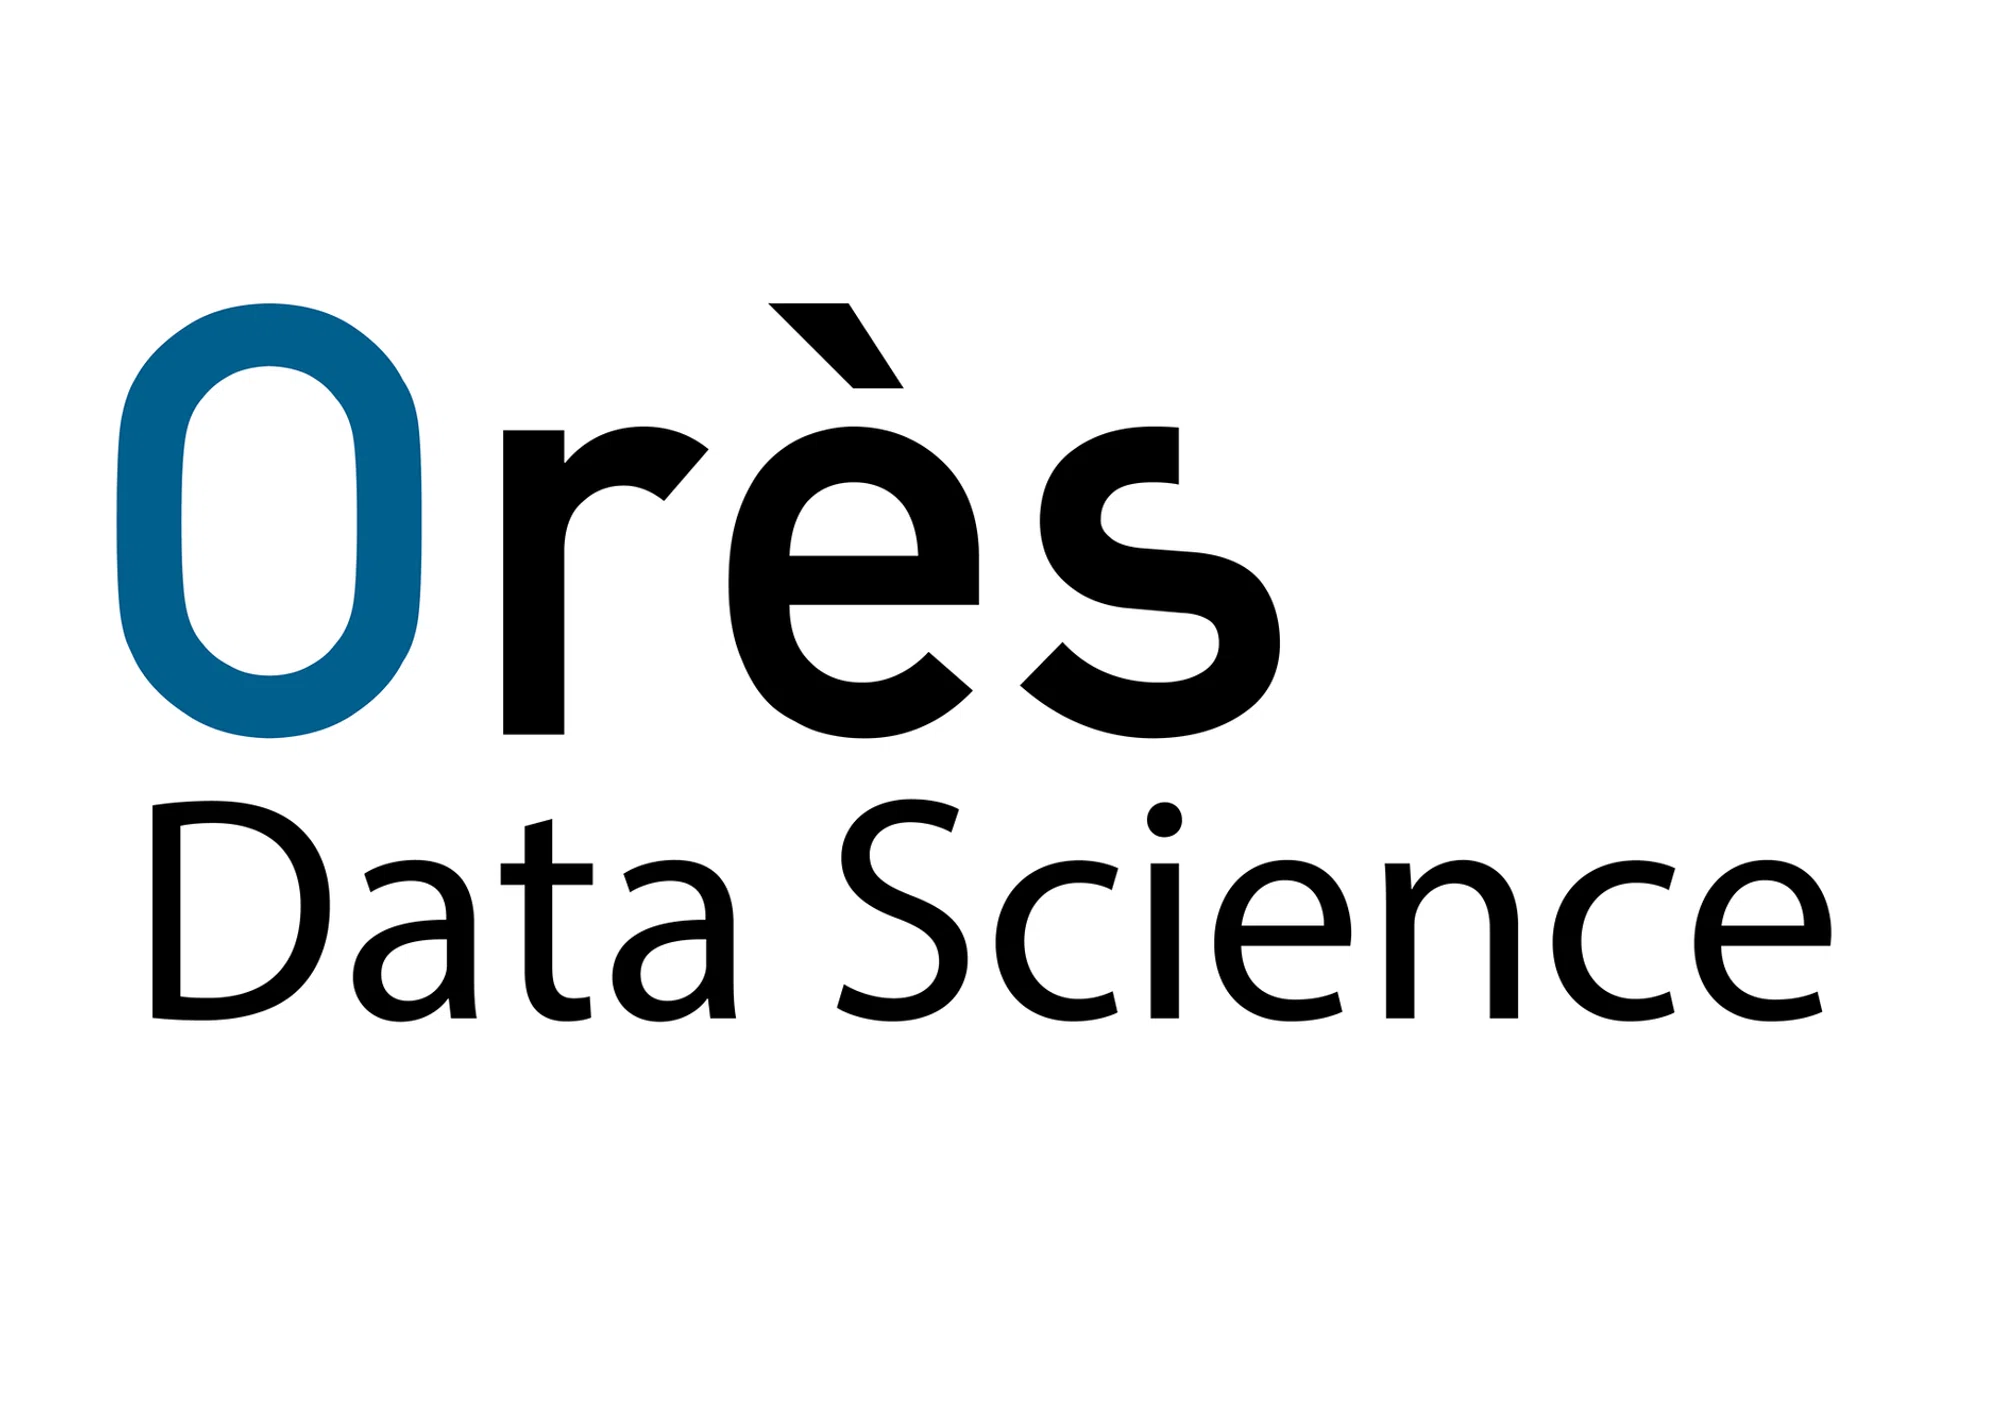 Orès Data Science